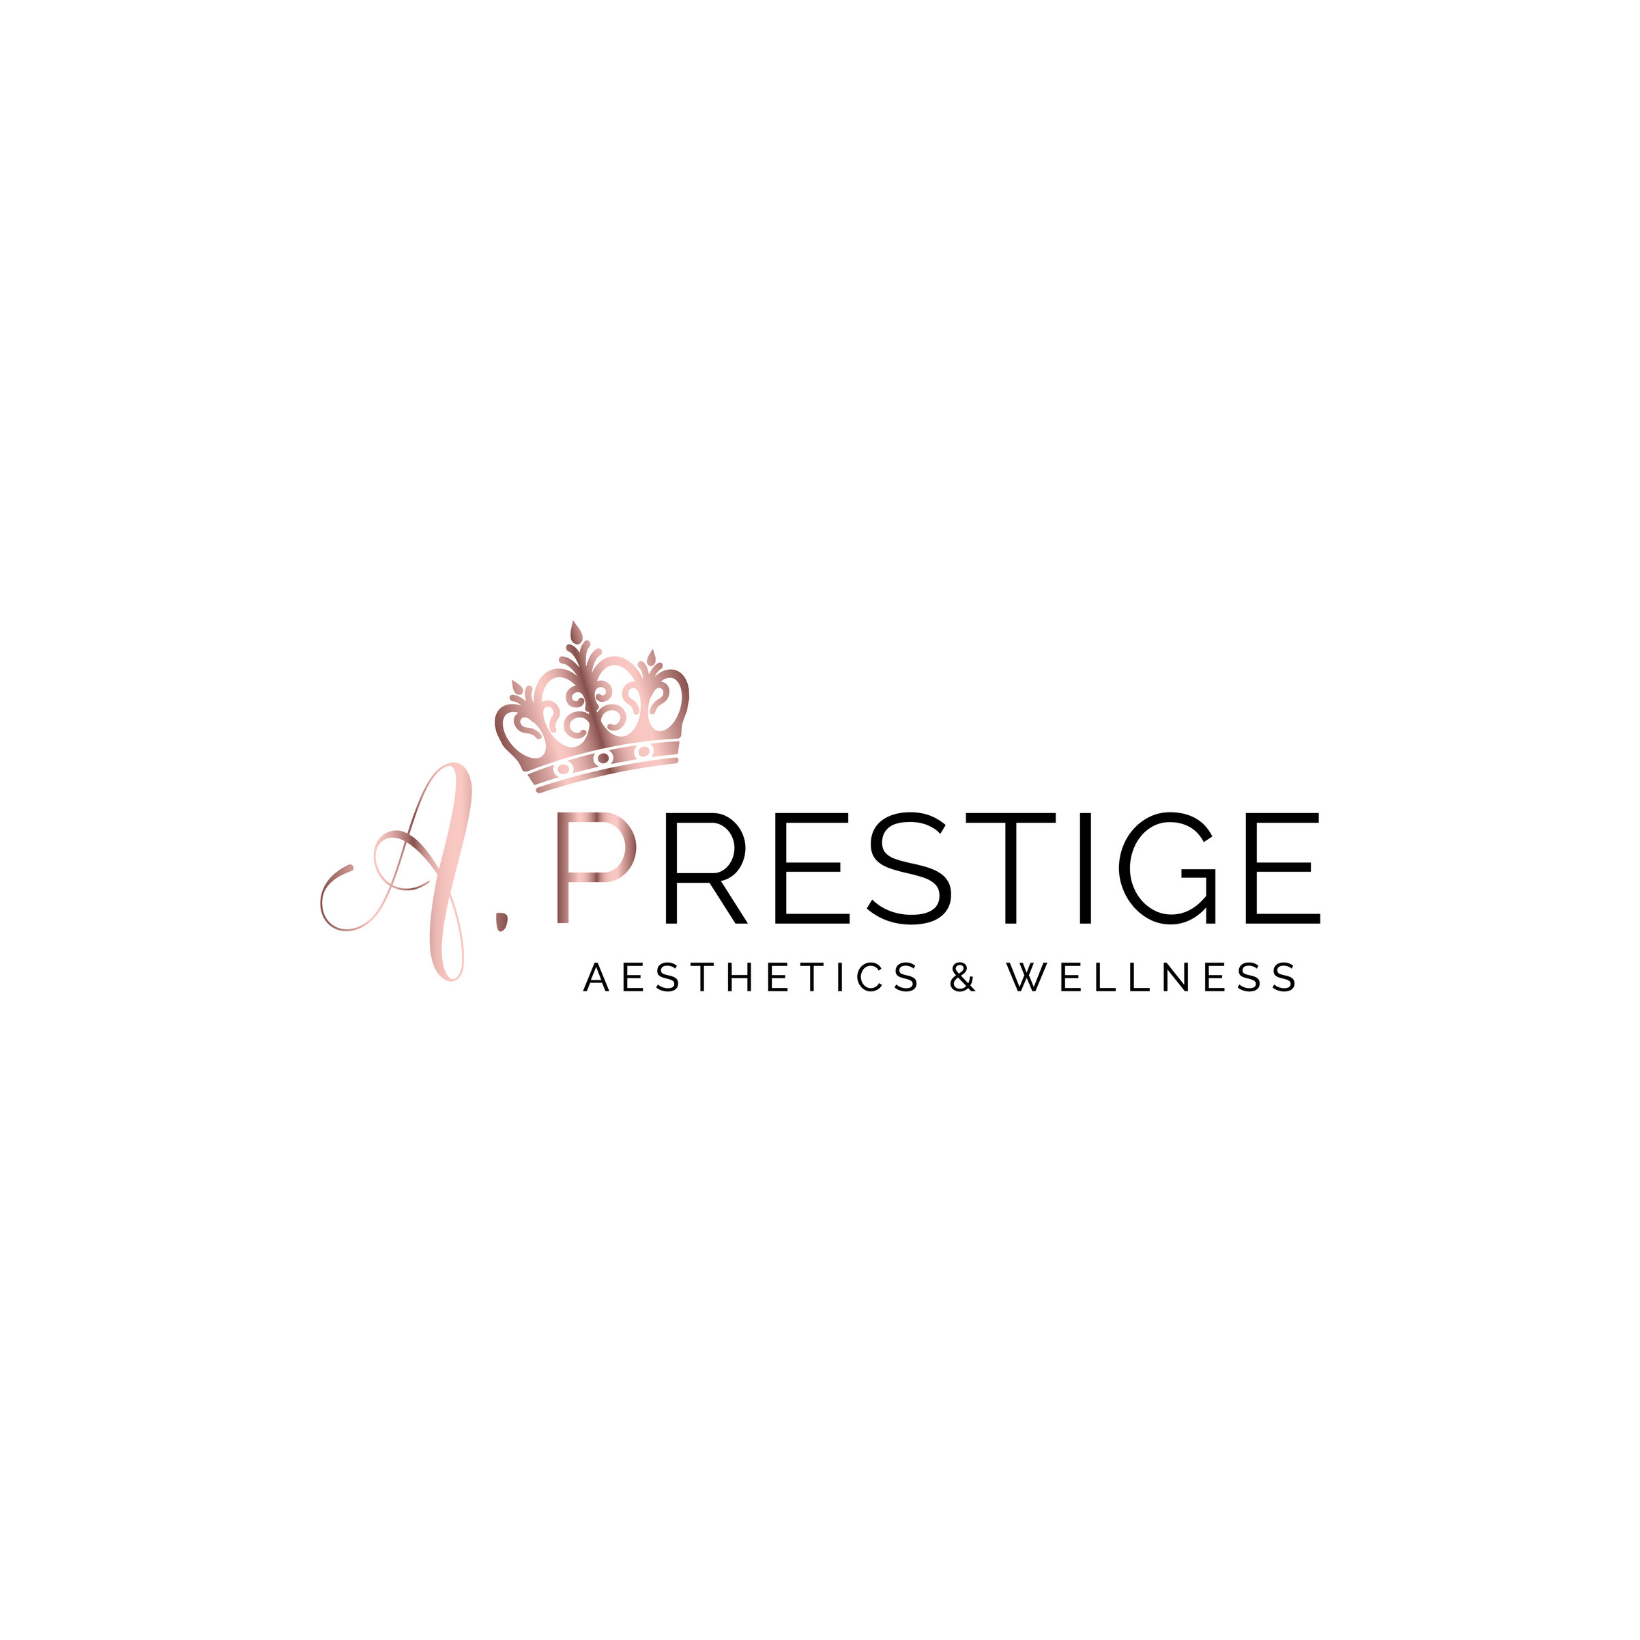 A. Prestige Aesthetics and Wellness